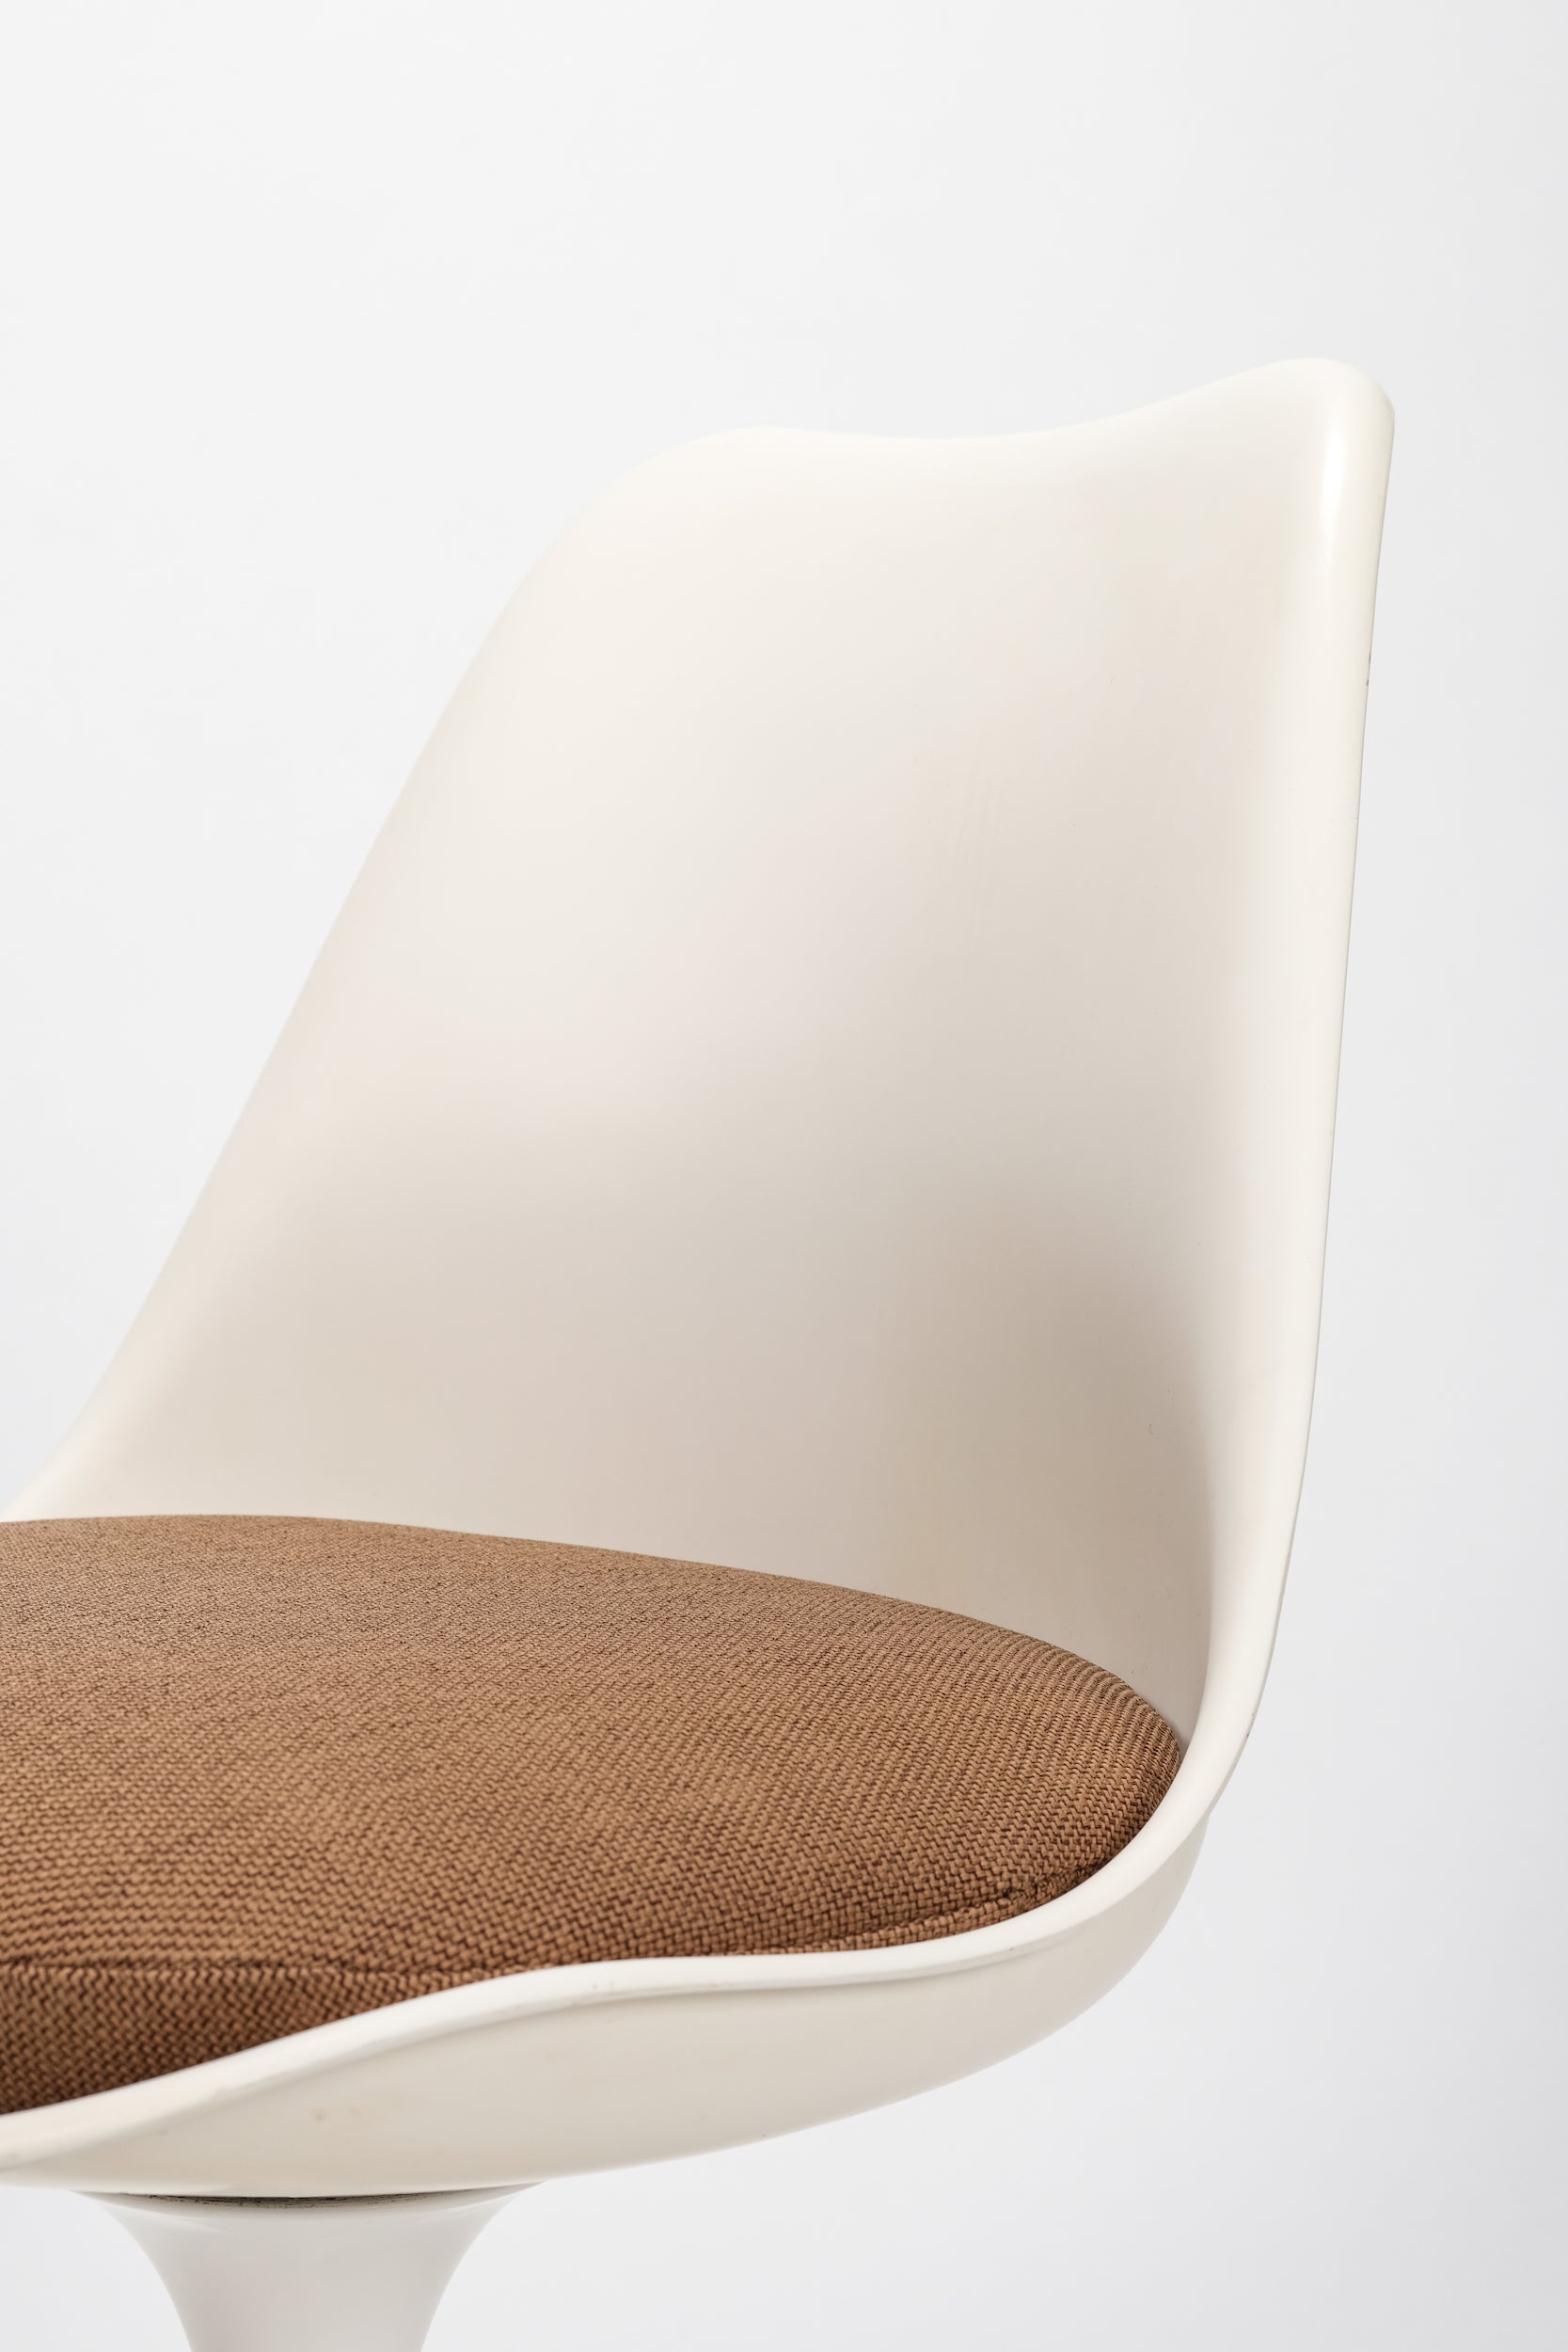 4 Eero Saarinen Tulip swivel chairs, Knoll Int., 60s